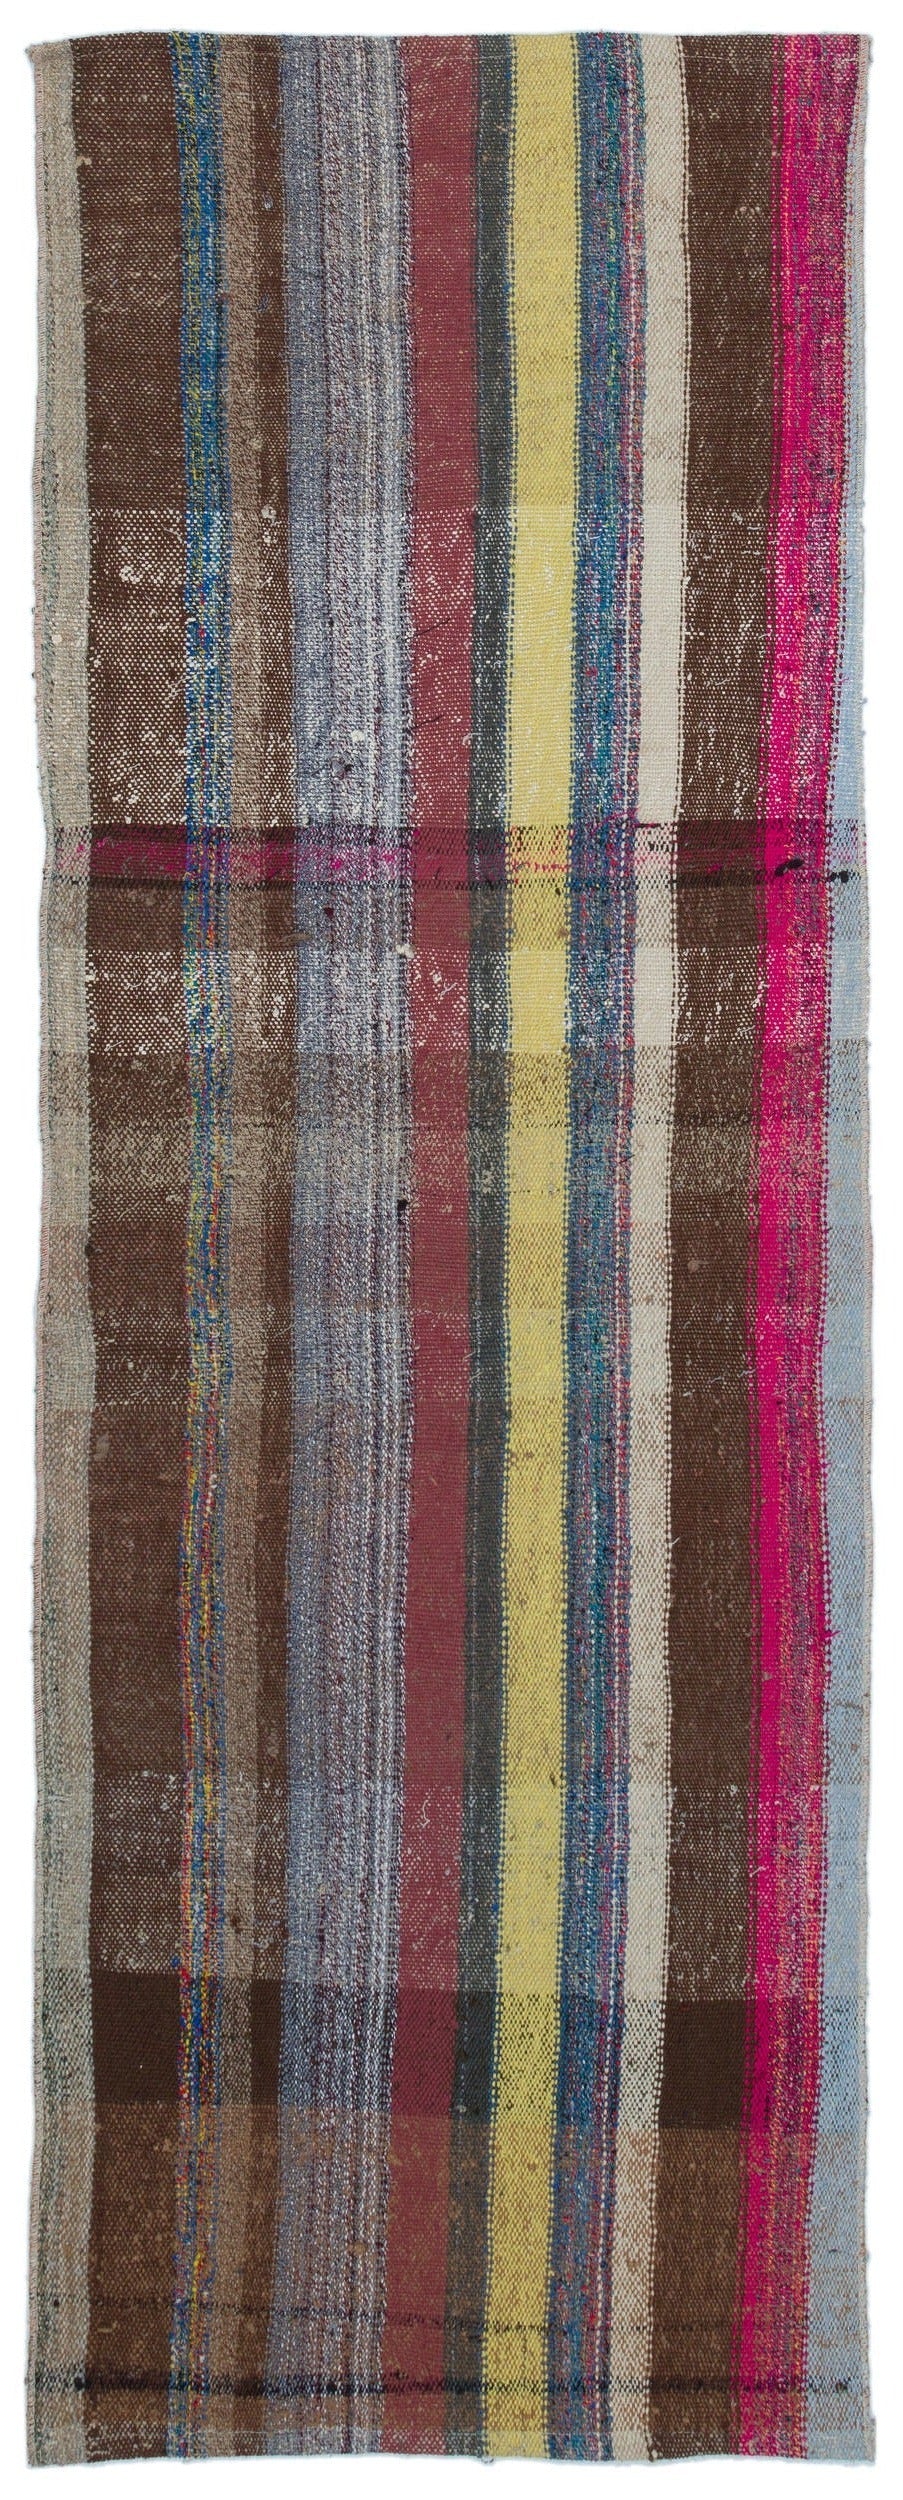 Cretan Brown Striped Wool Hand-Woven Carpet 072 x 207